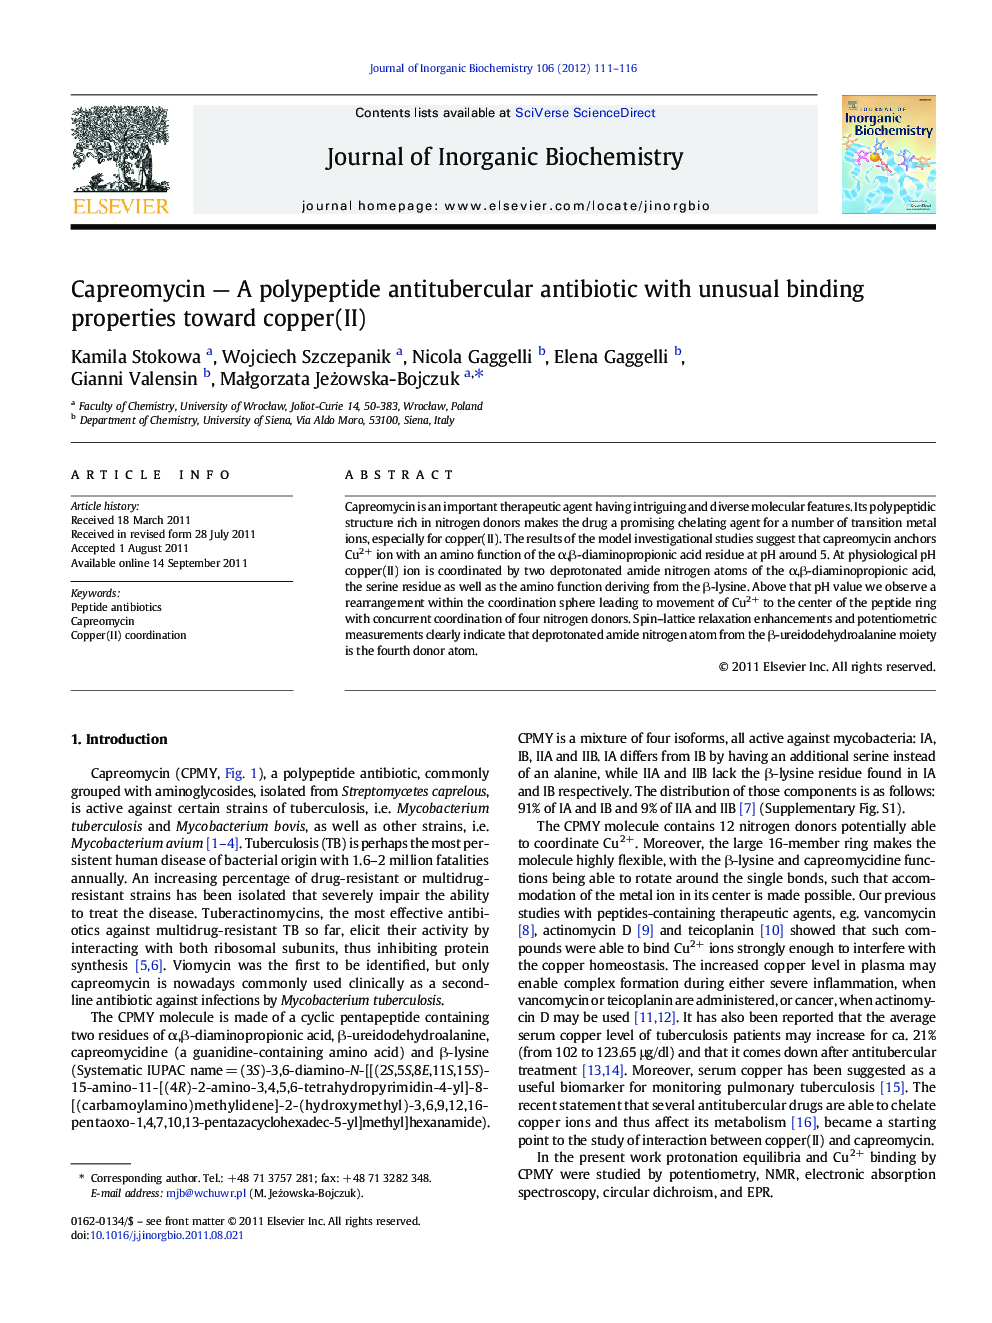 Capreomycin — A polypeptide antitubercular antibiotic with unusual binding properties toward copper(II)